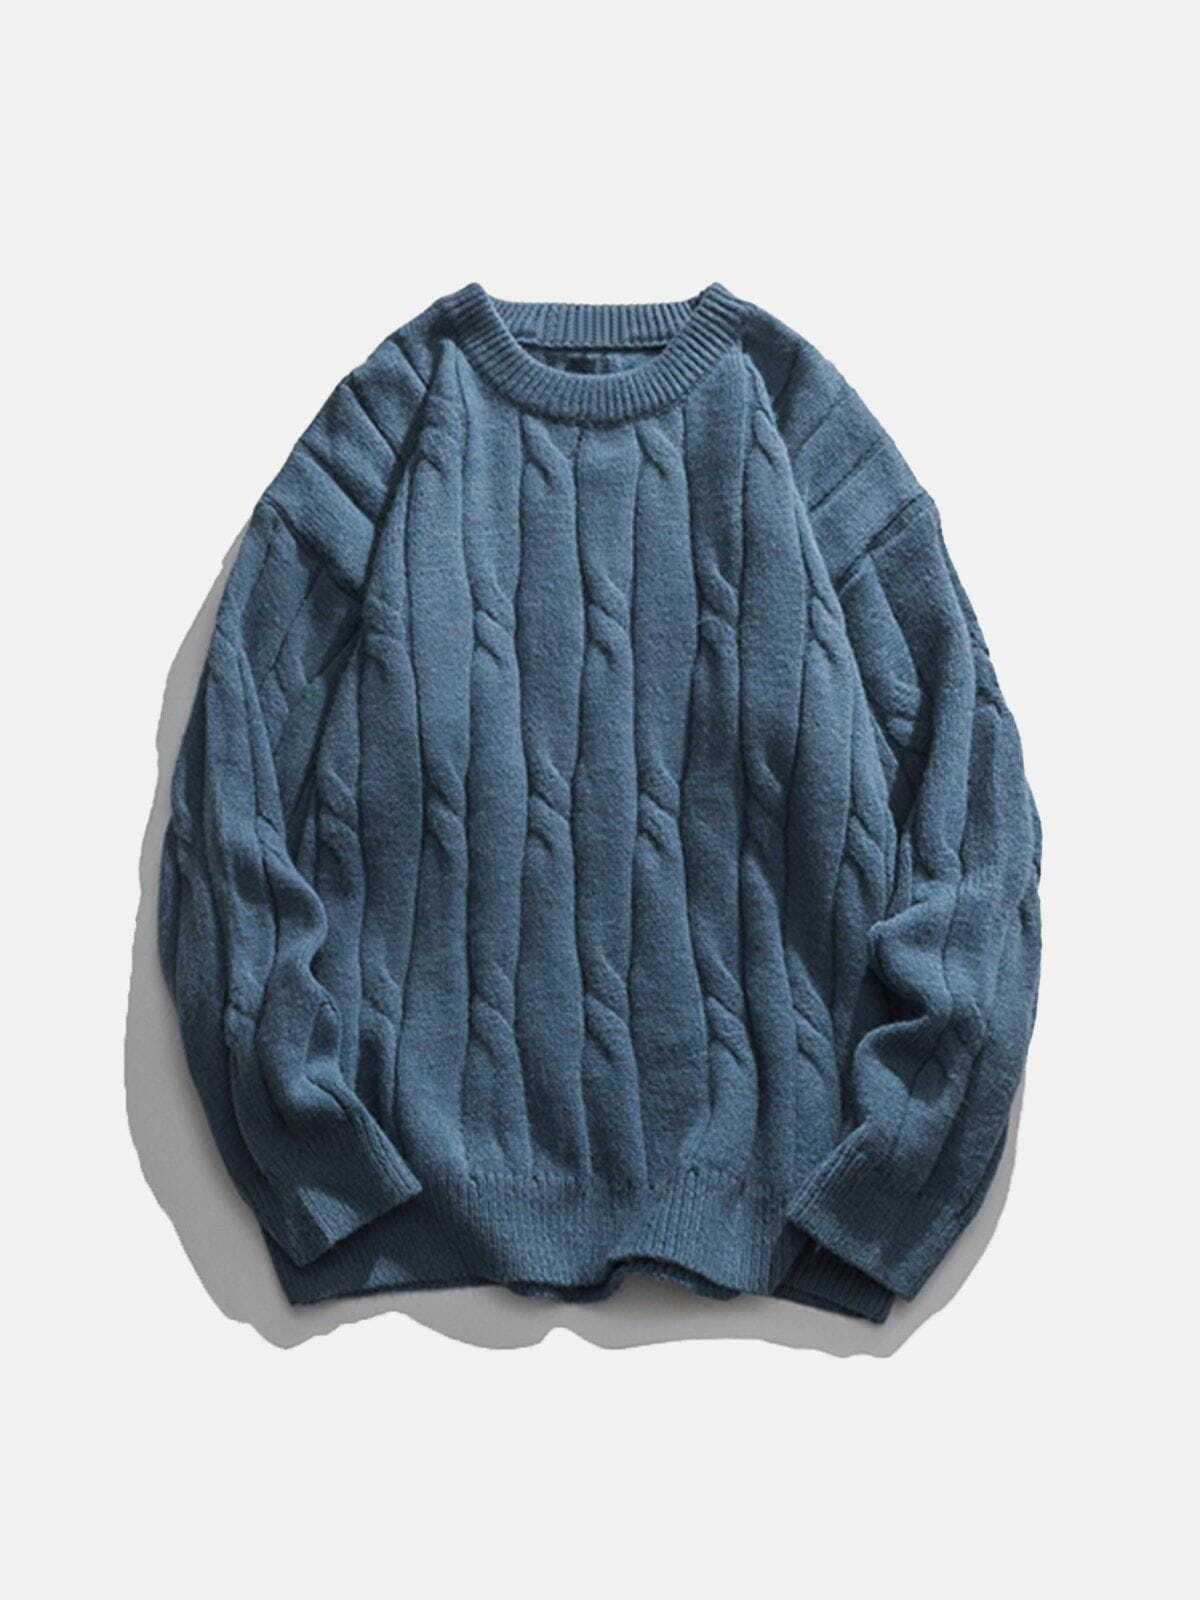 vibrant woven sweater bold & chic streetwear 6072